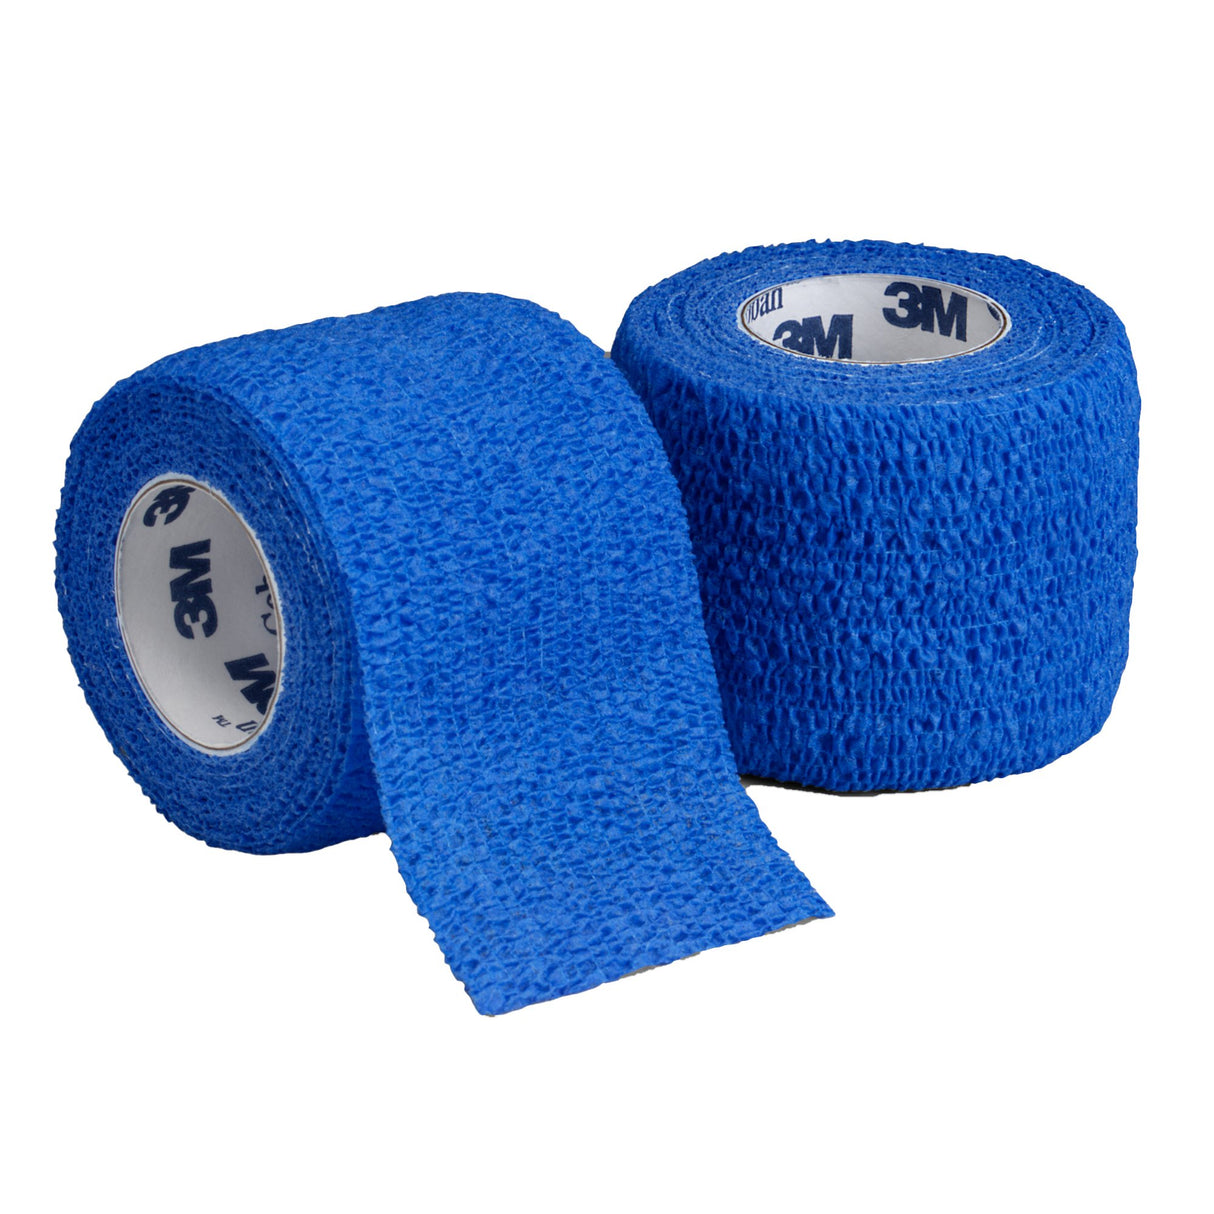 3M™ Coban™ Self-adherent Closure Cohesive Bandage, 3 Inch x 5 Yard, Blue